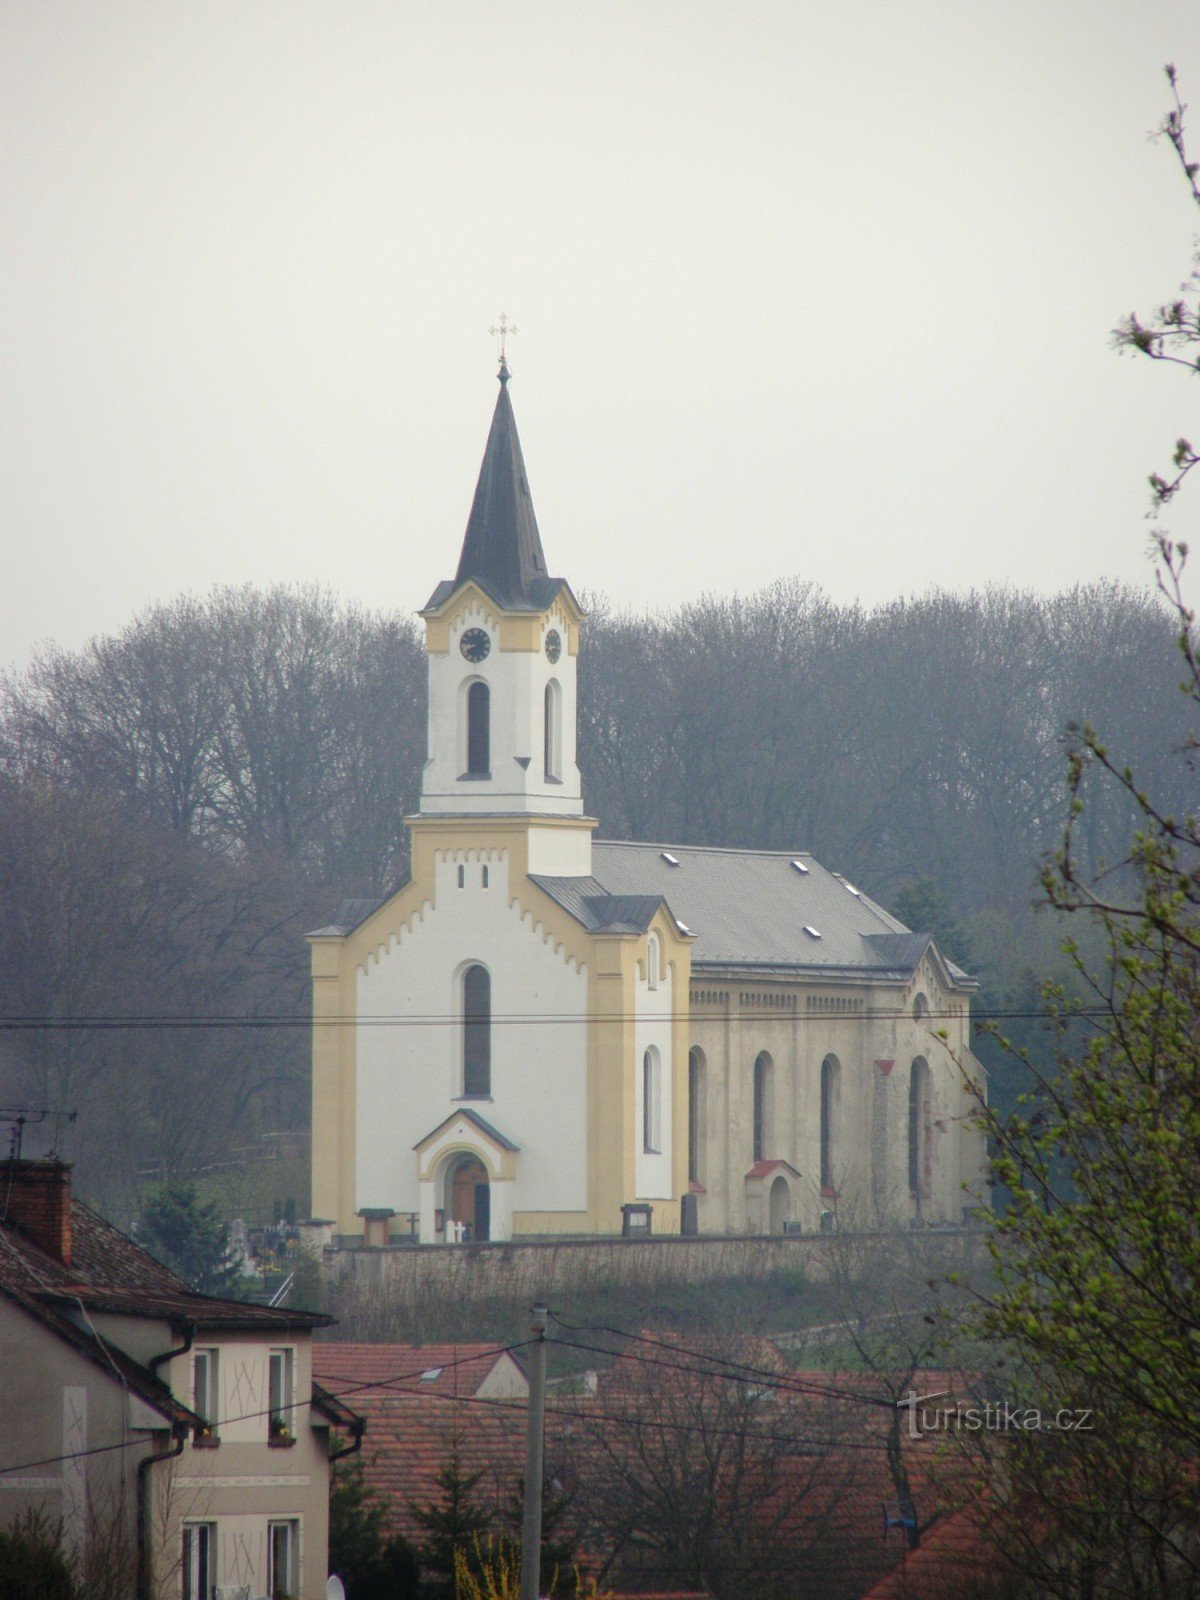 Skořenice - Nhà thờ St. Mary Magdalene